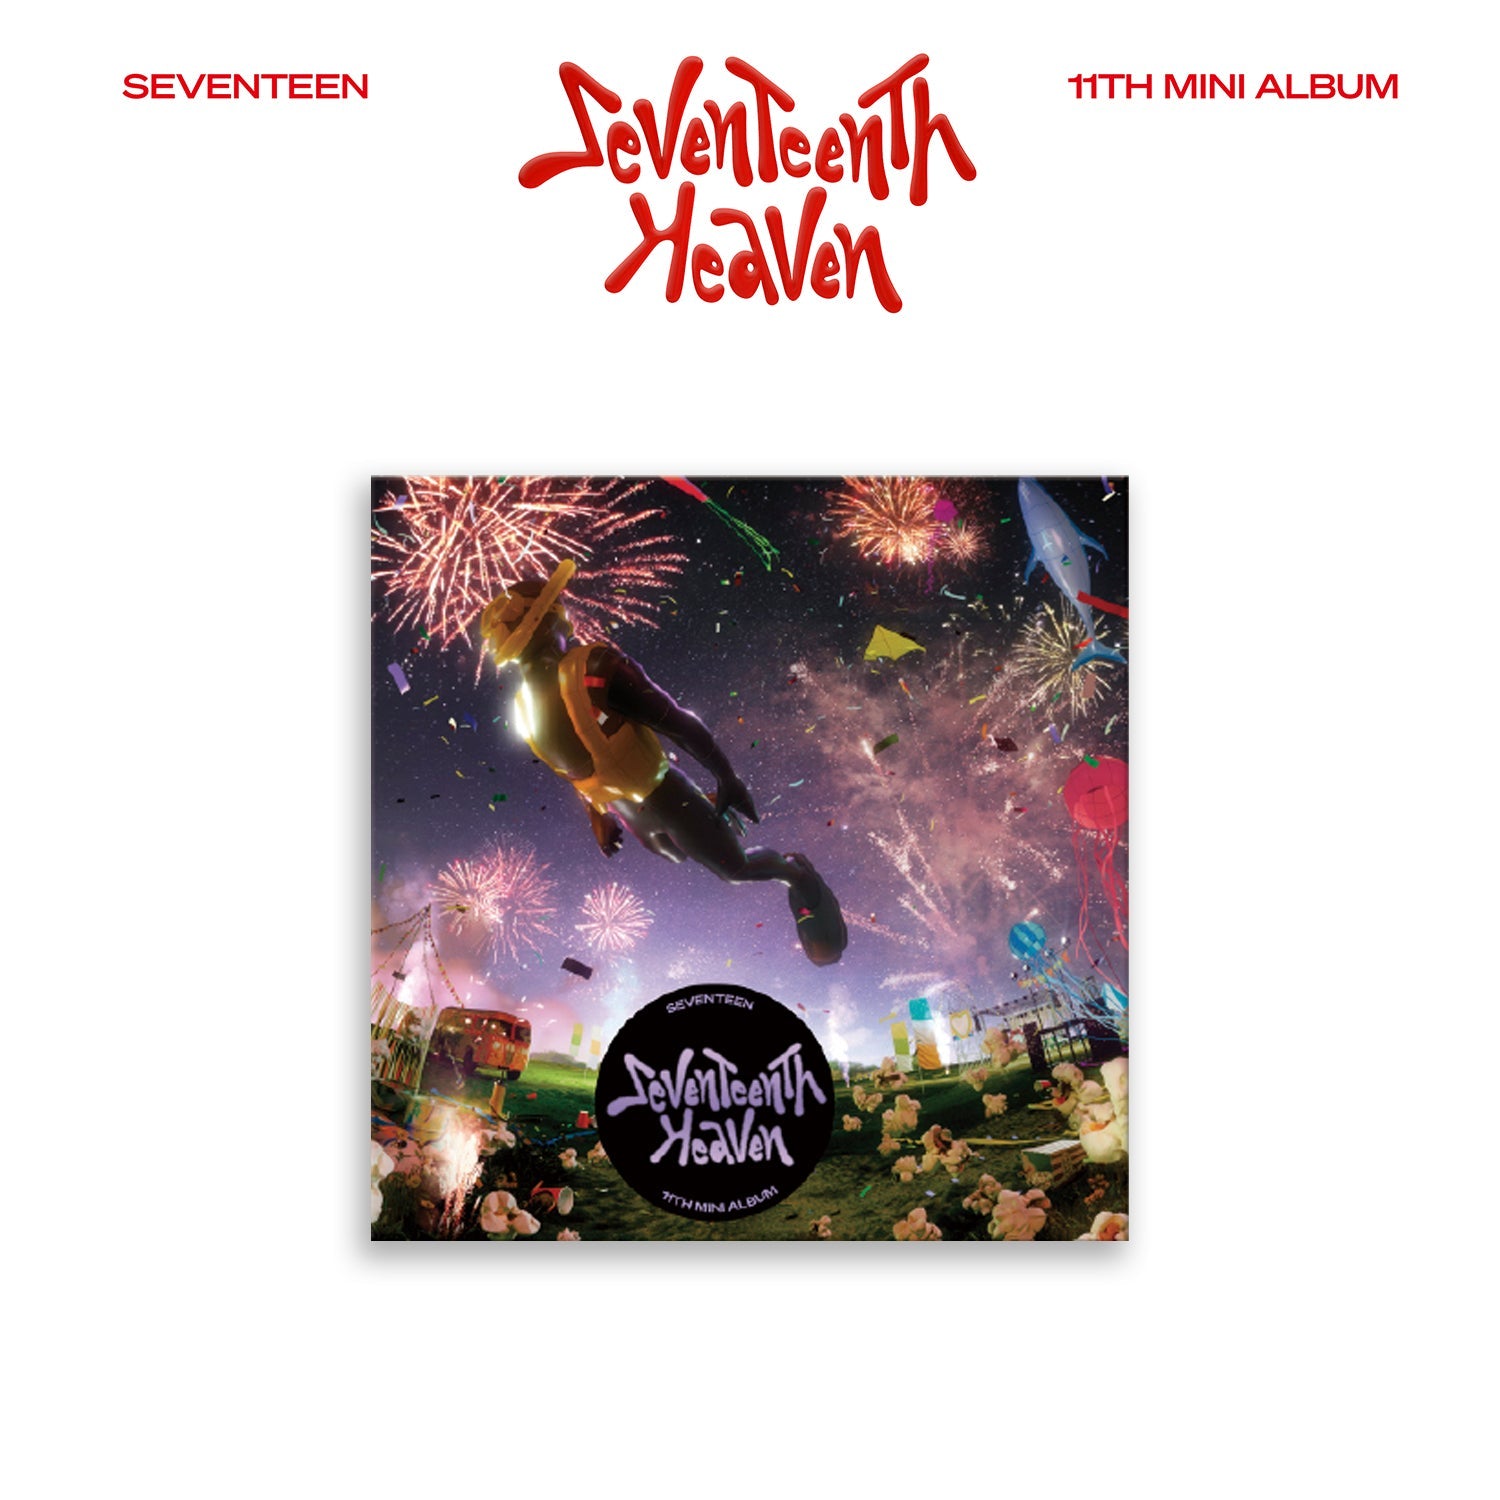 SEVENTEEN 11TH MINI ALBUM 'SEVENTEENTH HEAVEN' PM 10:23 VERSION COVER